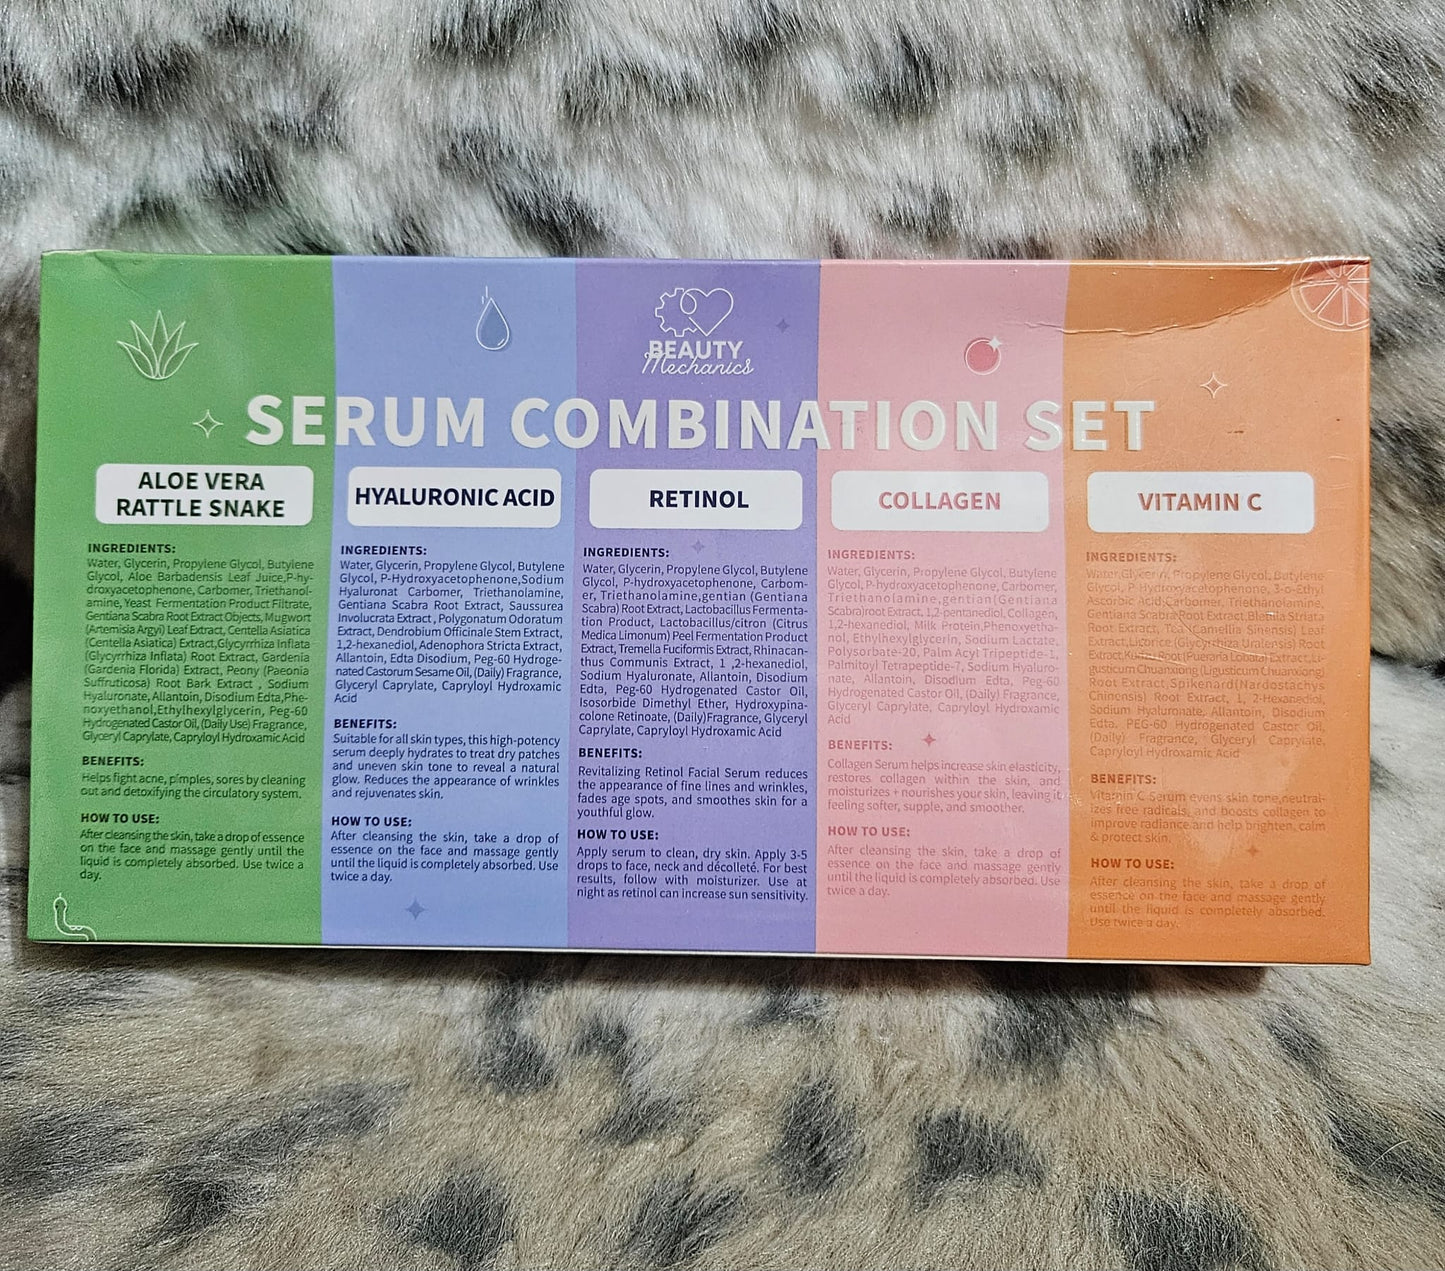 Beauty mechanics serum combination set